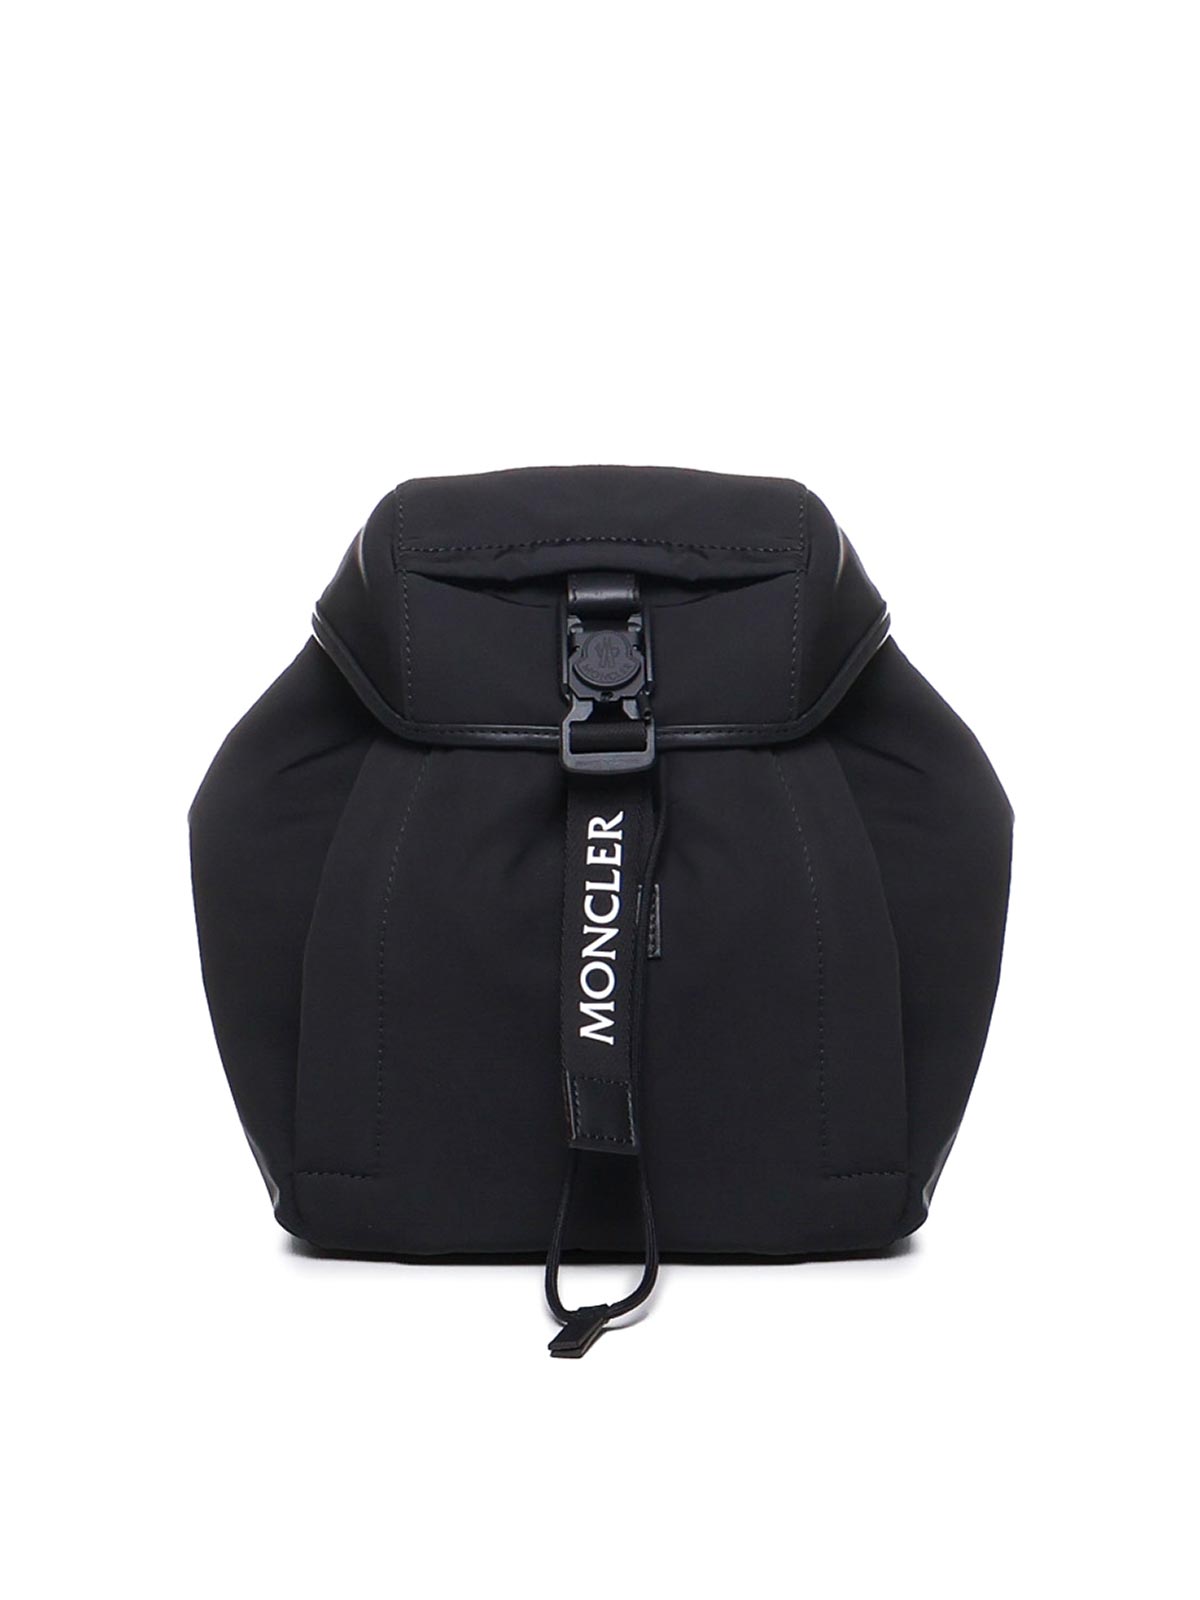 Moncler Black Ribbon Bag